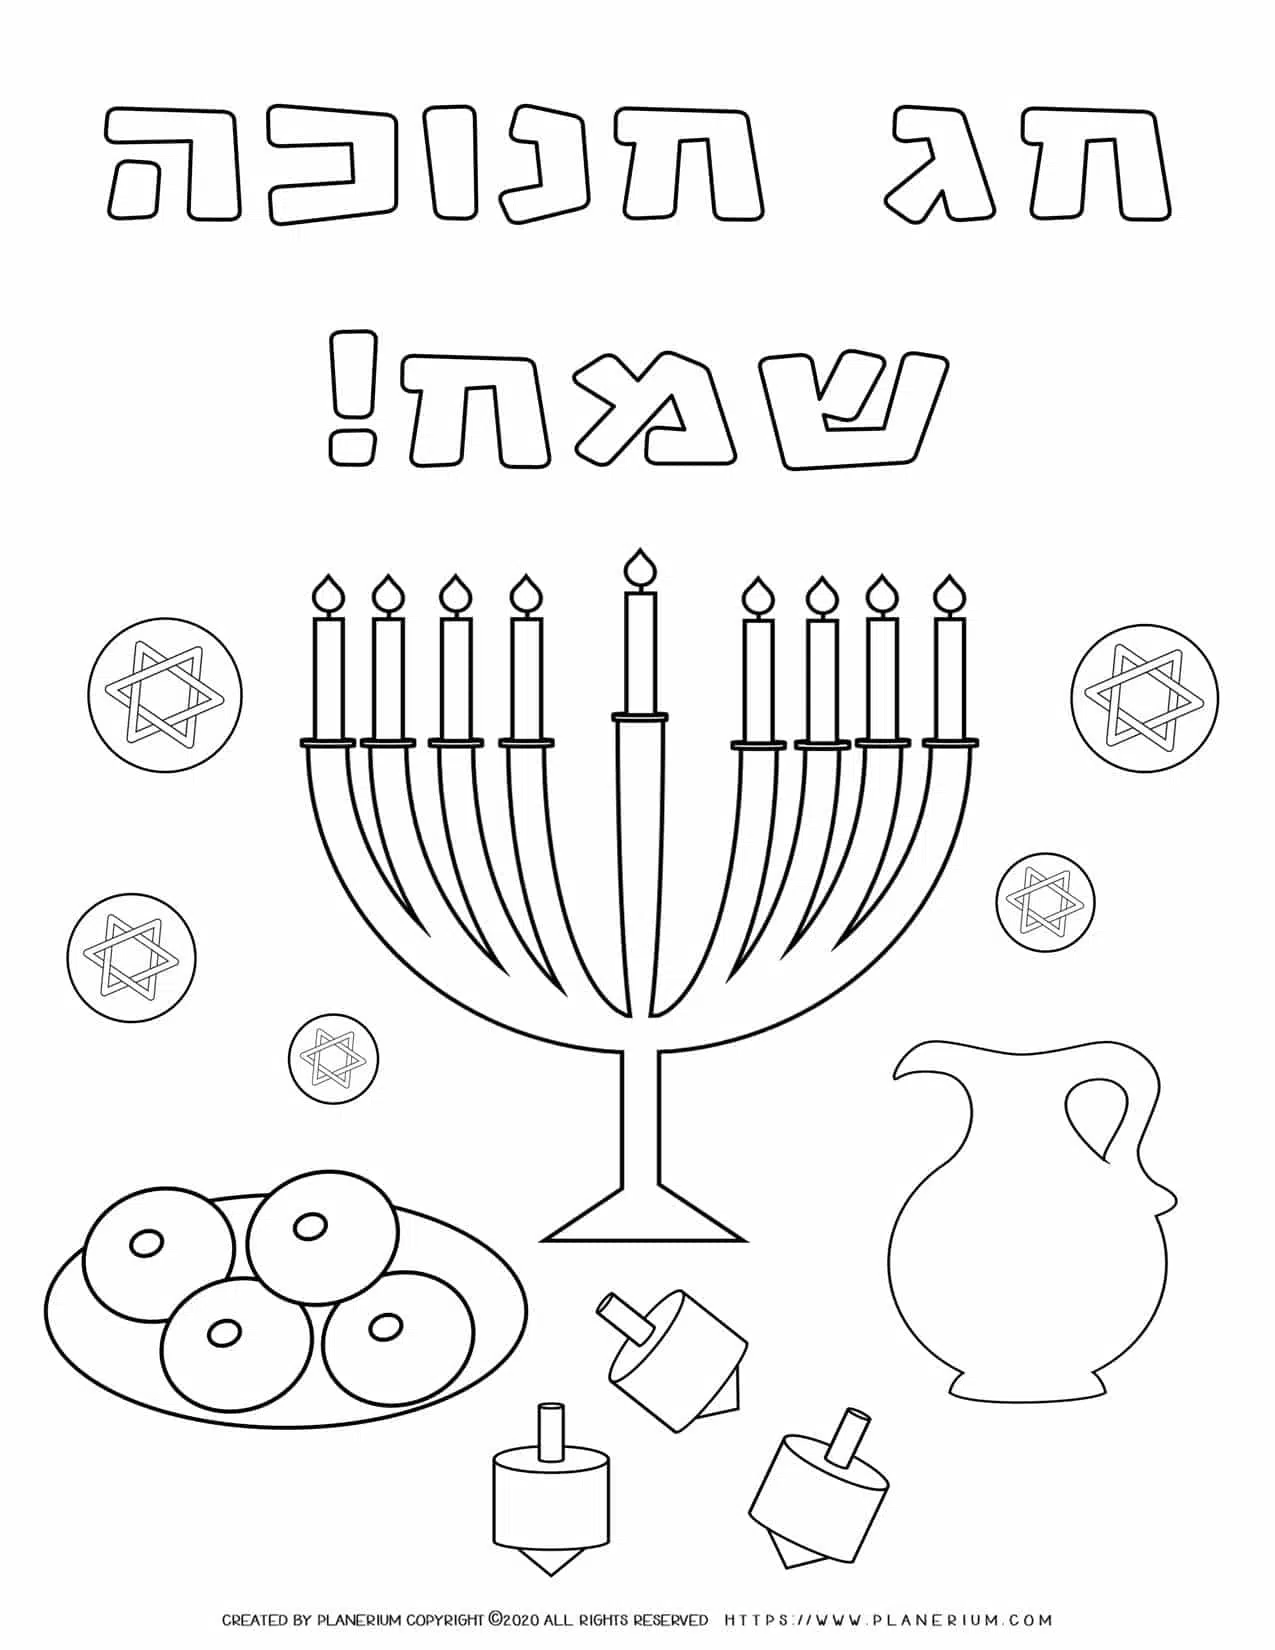 Happy hanukkah